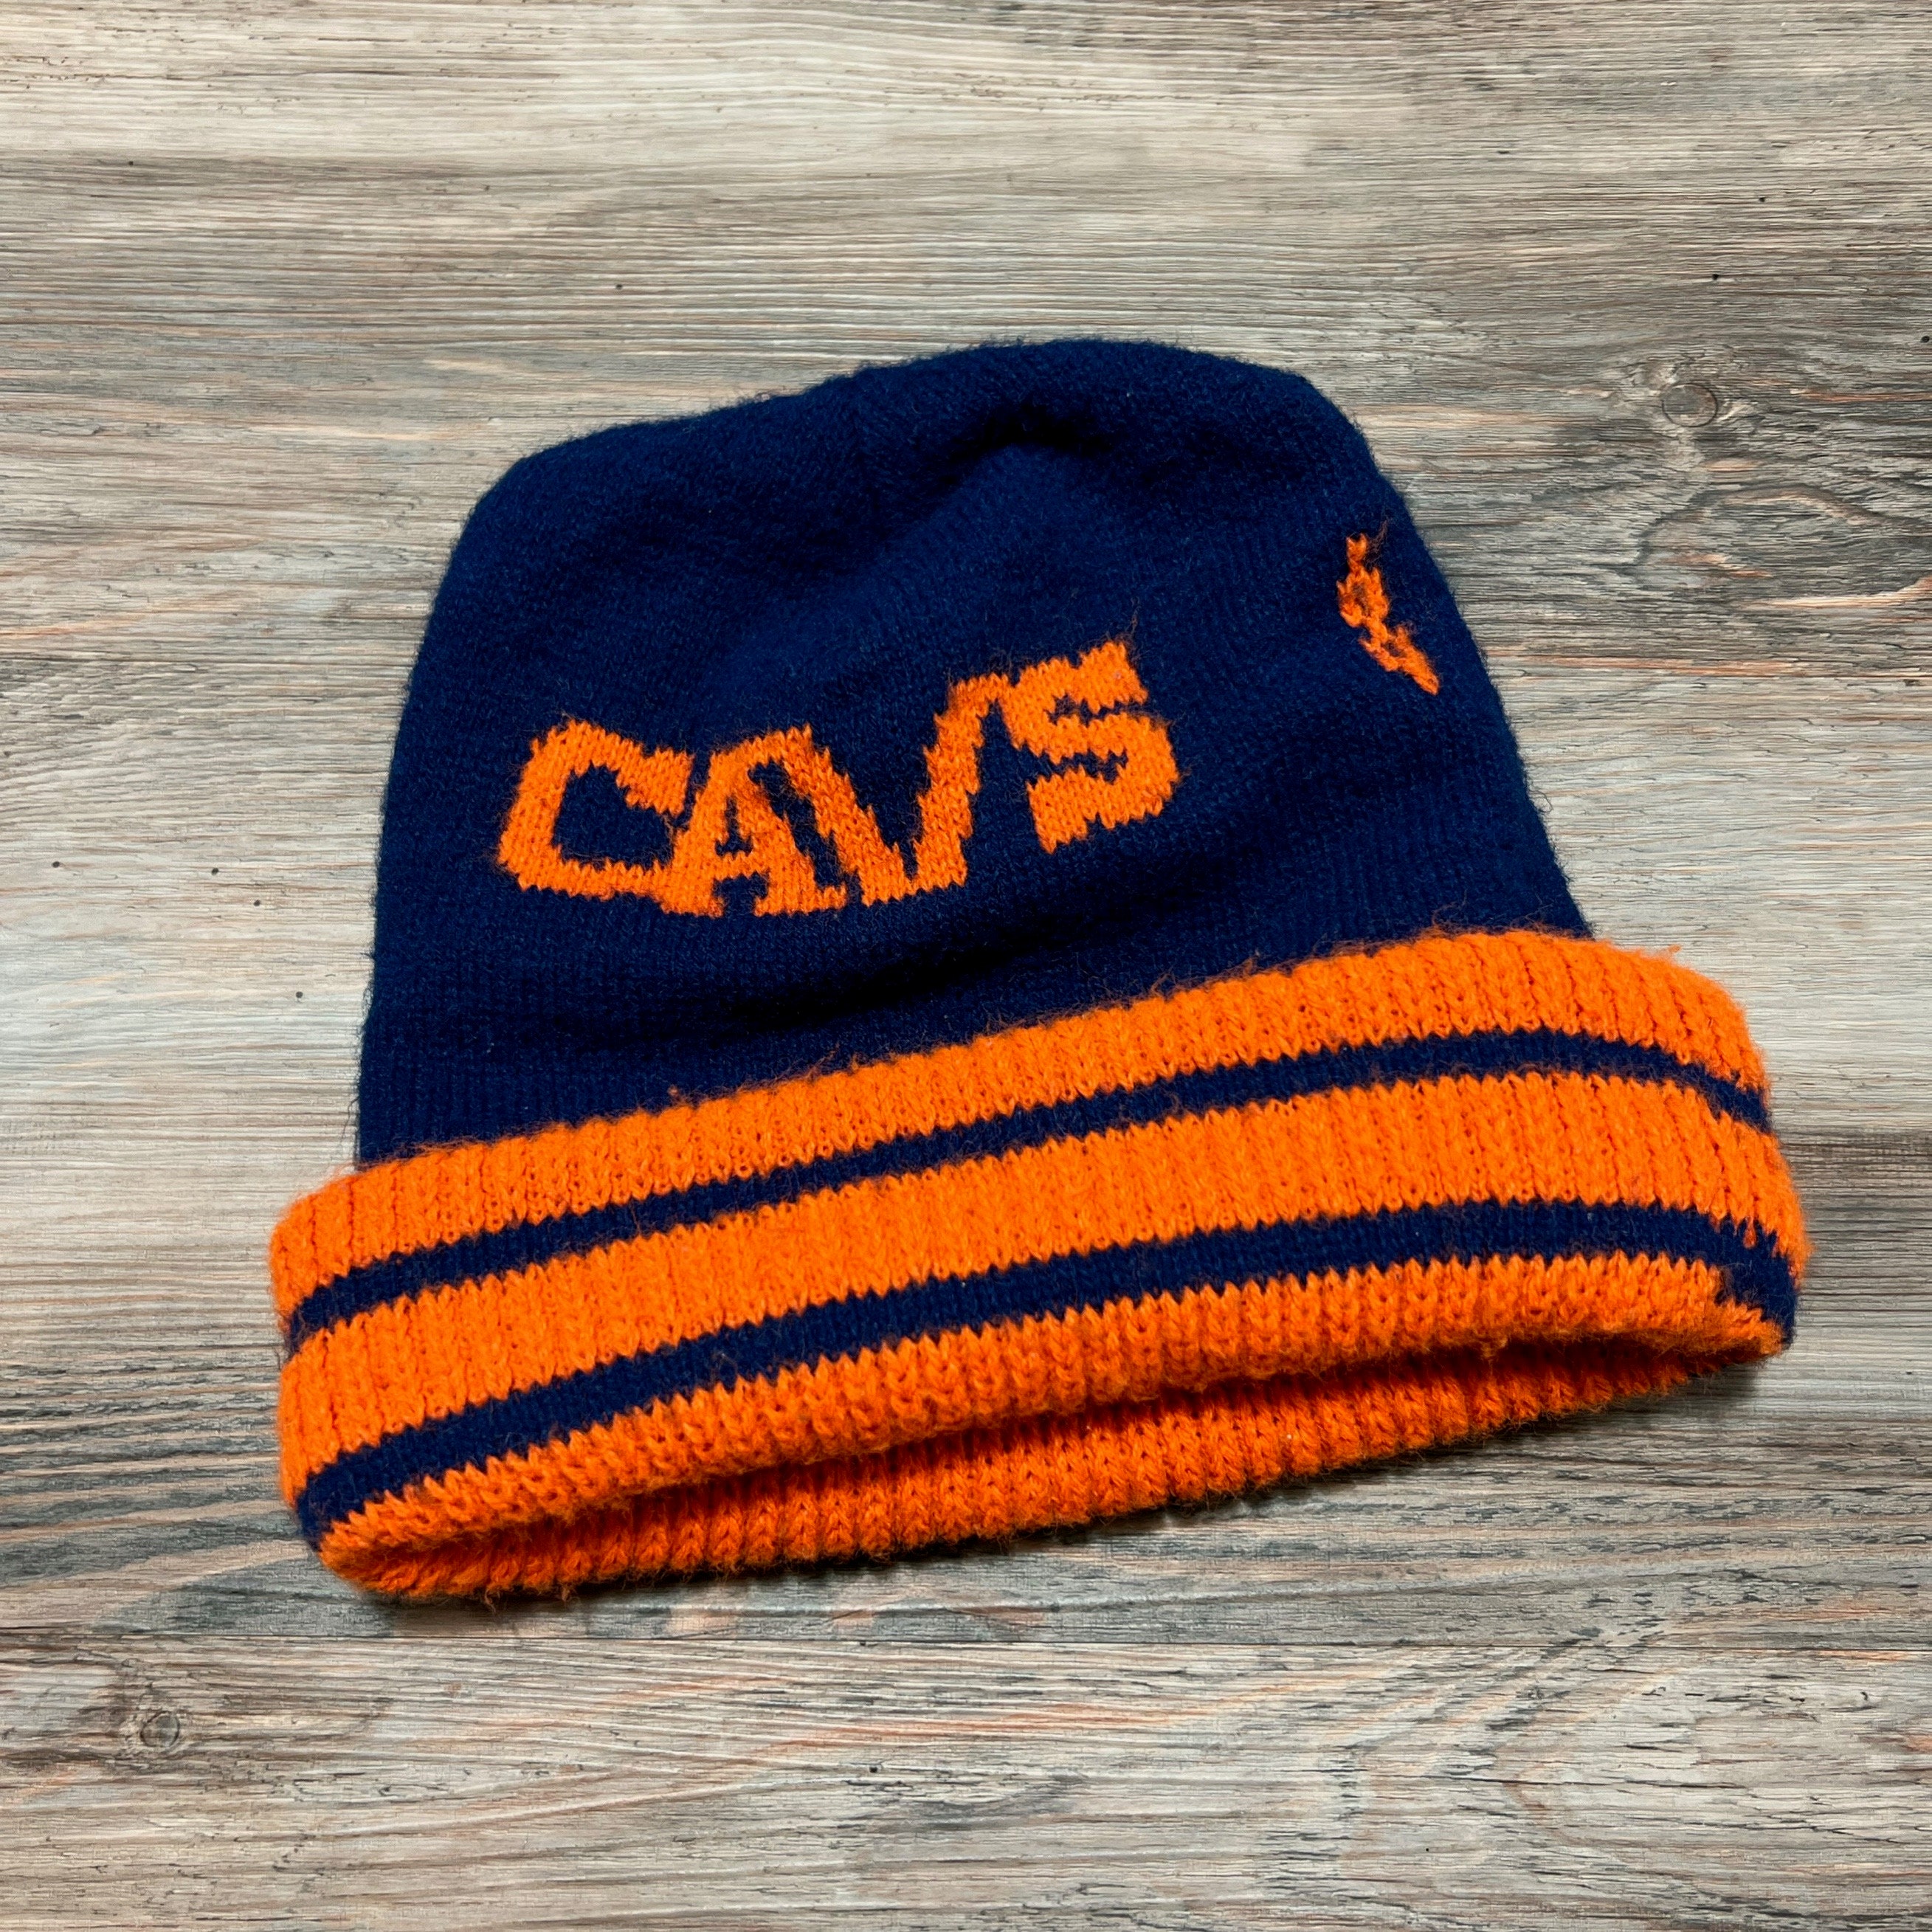 Fan Favorite Cleveland Cavaliers Winter Pom Hat NWT Knit Cavs NBA Basketball